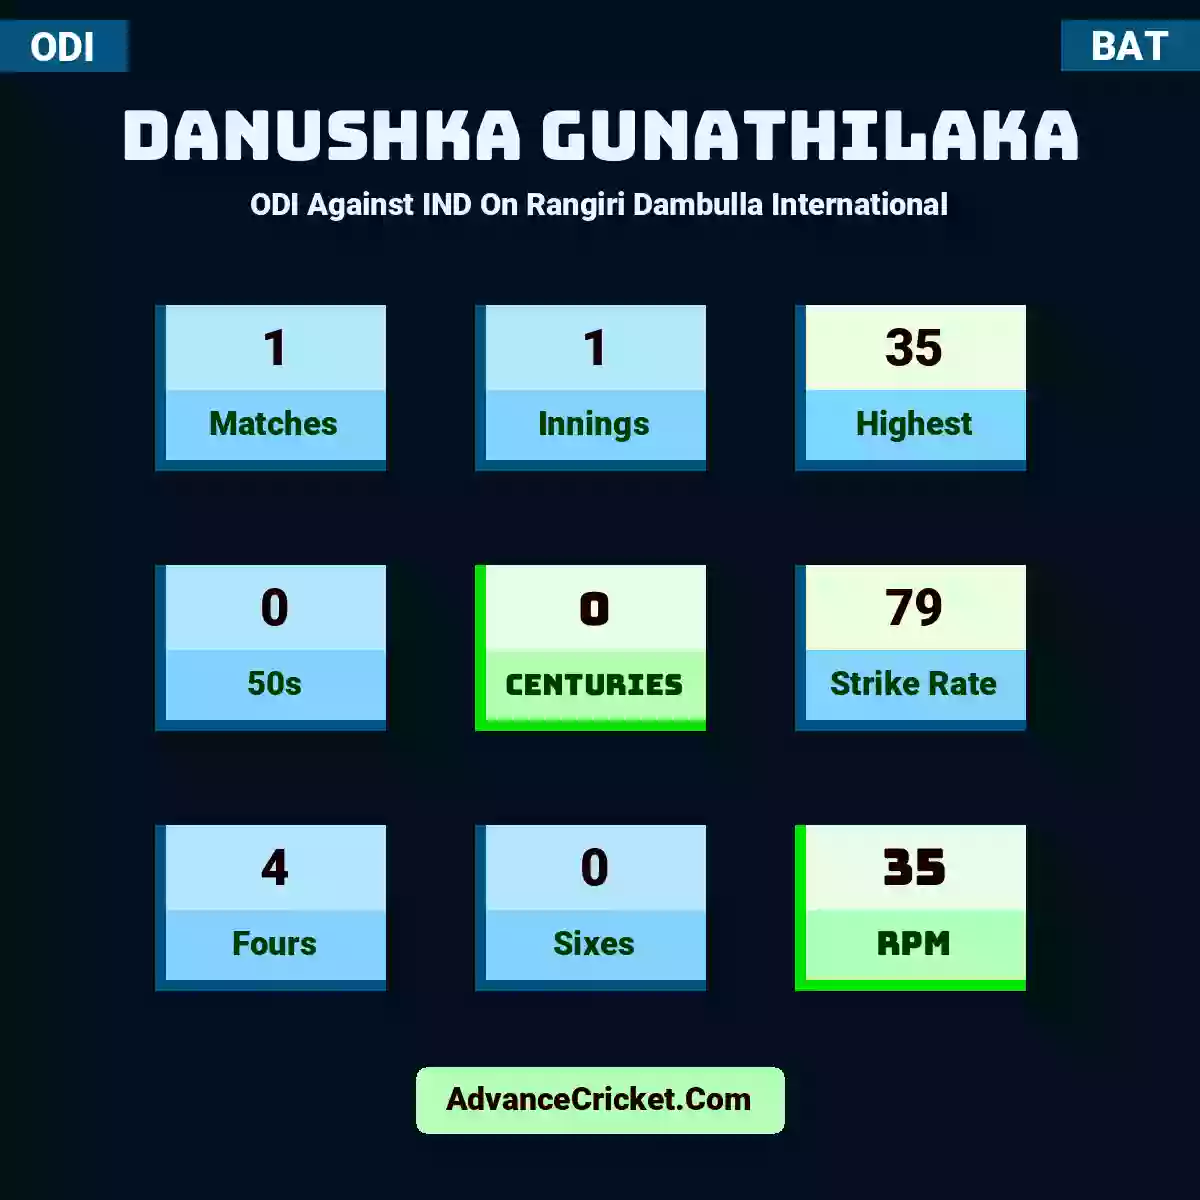 Danushka Gunathilaka ODI  Against IND On Rangiri Dambulla International, Danushka Gunathilaka played 1 matches, scored 35 runs as highest, 0 half-centuries, and 0 centuries, with a strike rate of 79. D.Gunathilaka hit 4 fours and 0 sixes, with an RPM of 35.